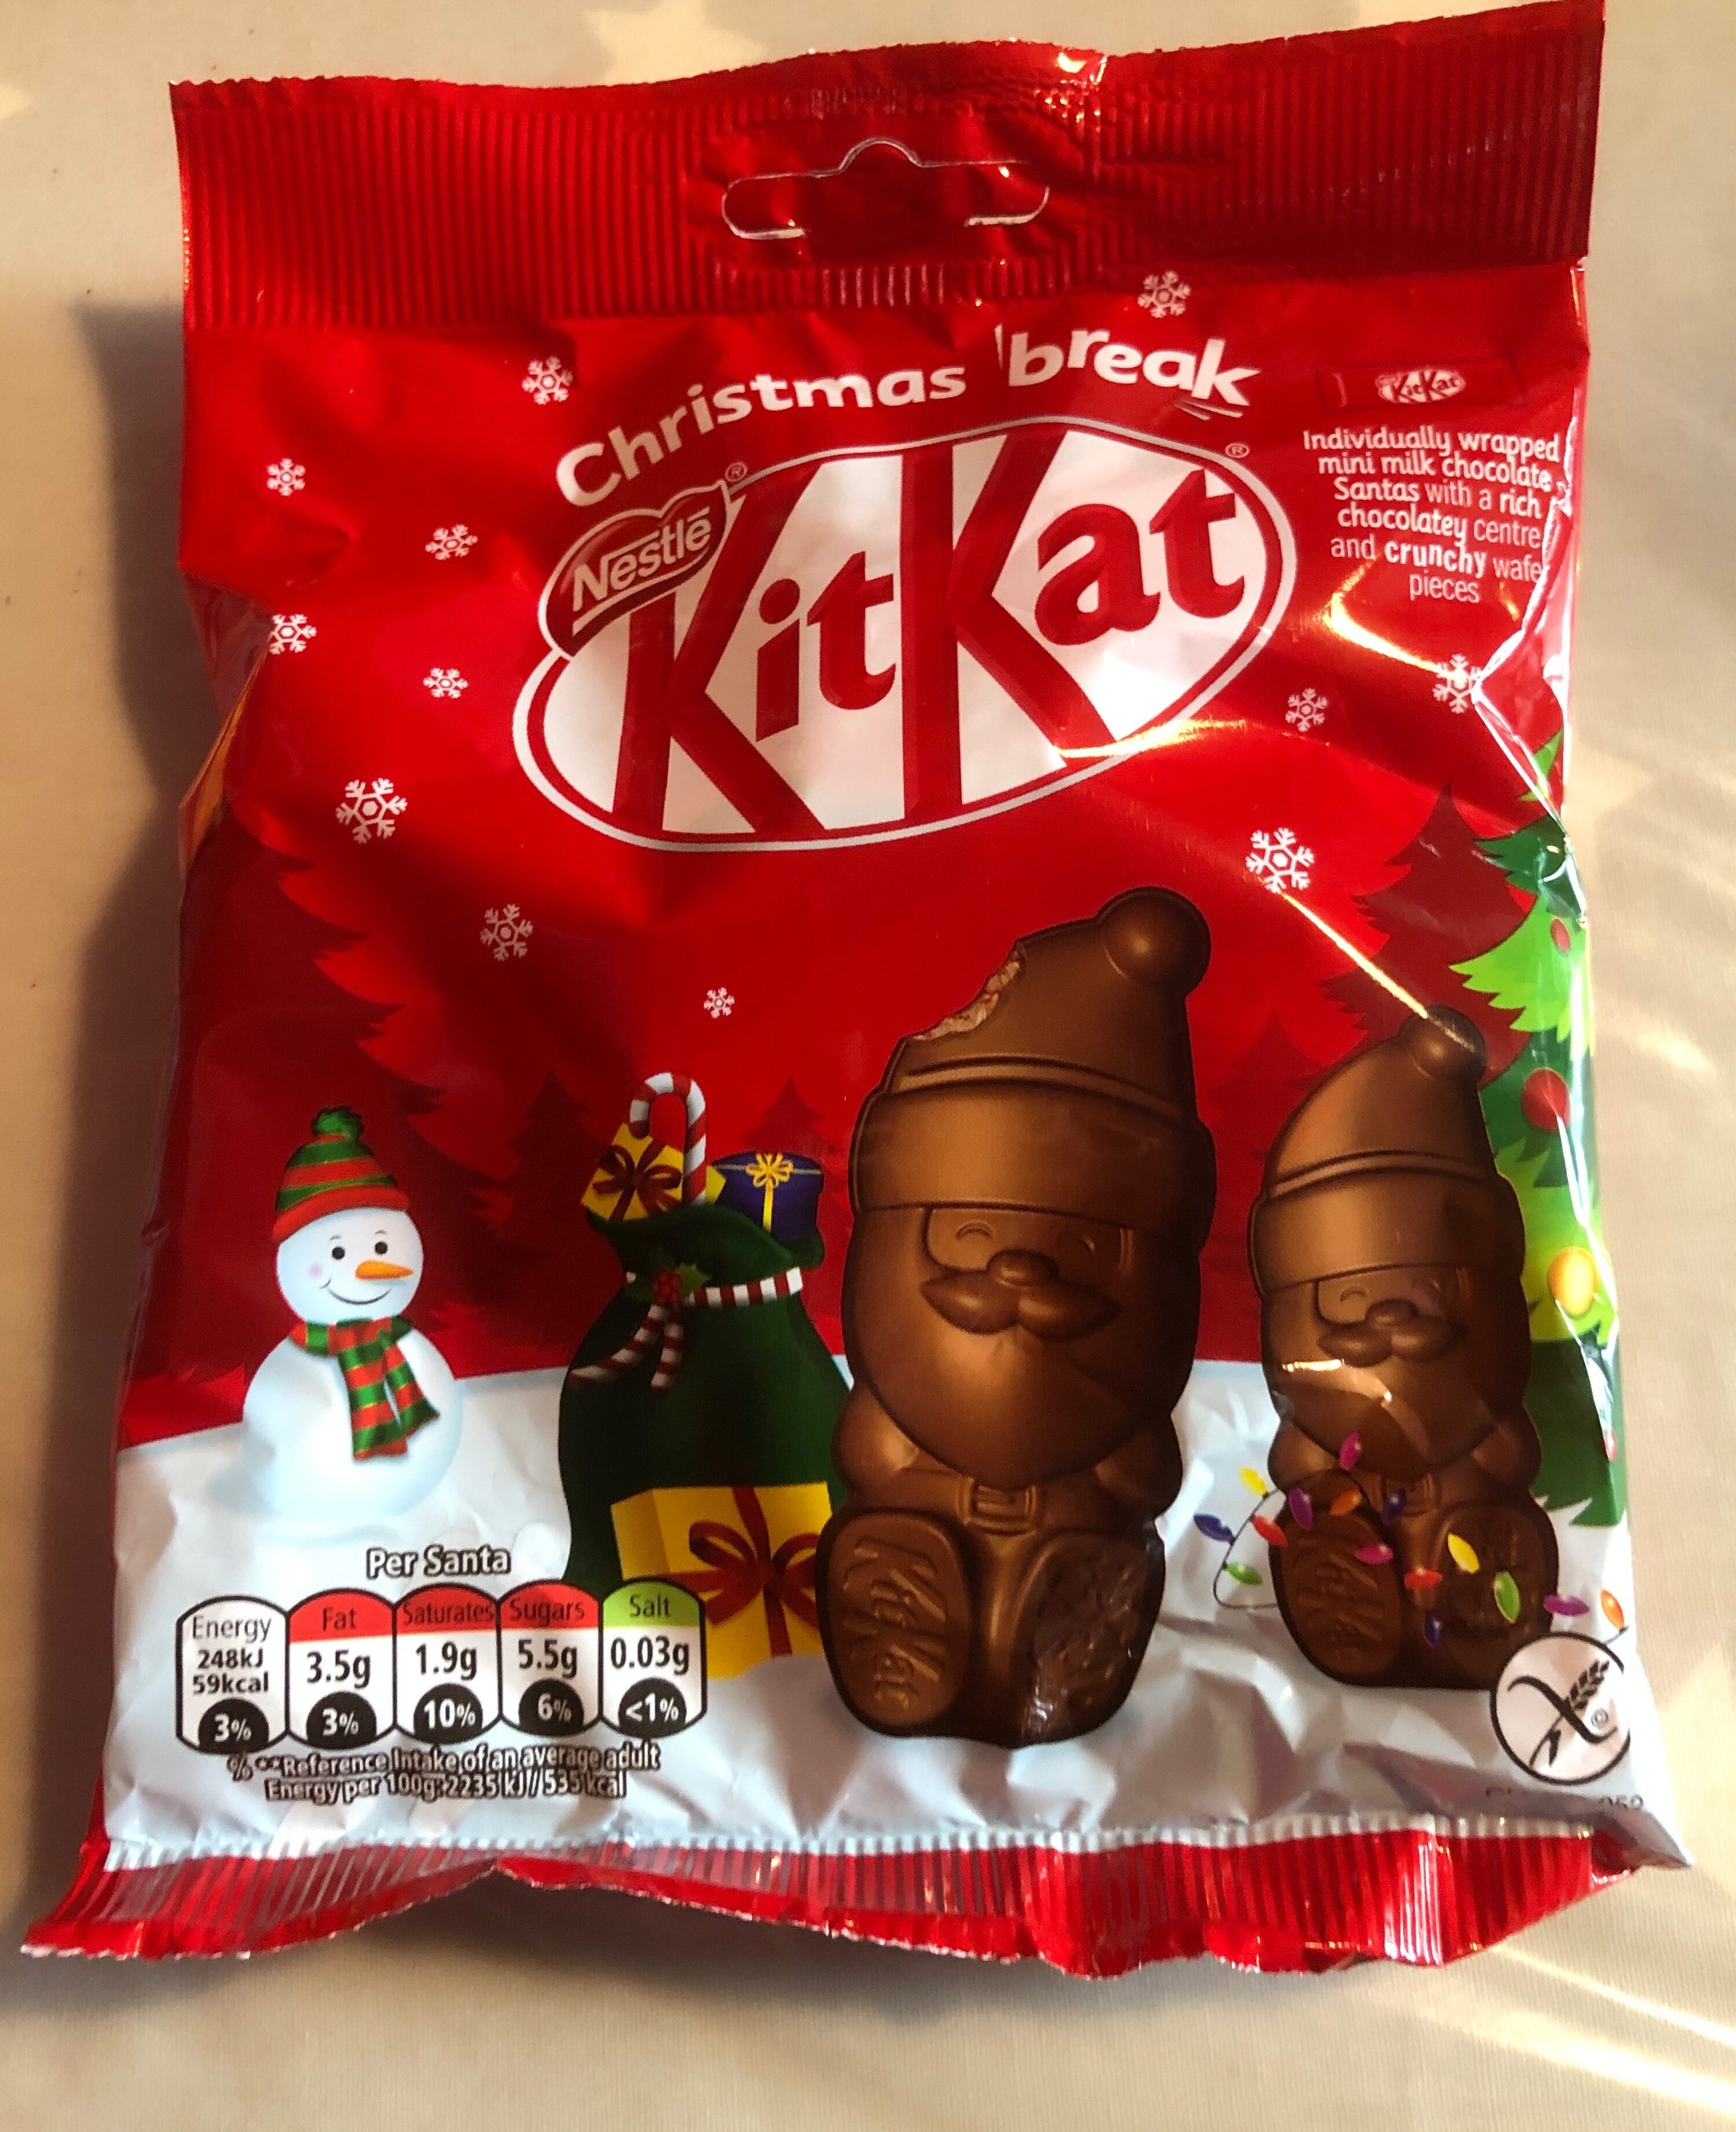 Cristmas Break KitKat - Product